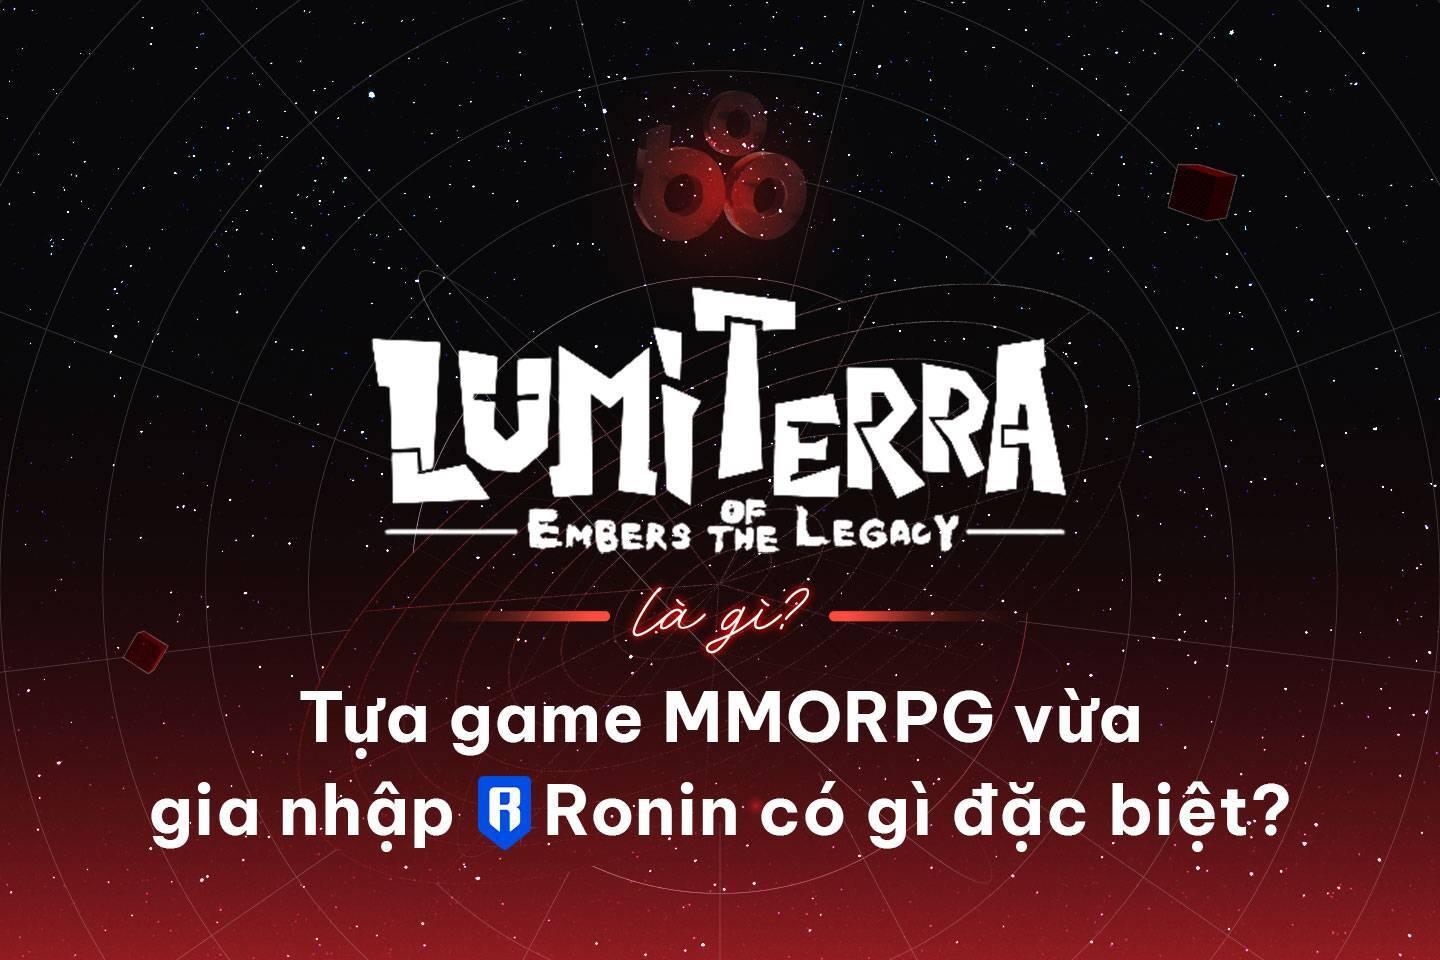 lumiterra-la-gi-tua-game-mmorpg-vua-gia-nhap-ronin-co-gi-dac-biet